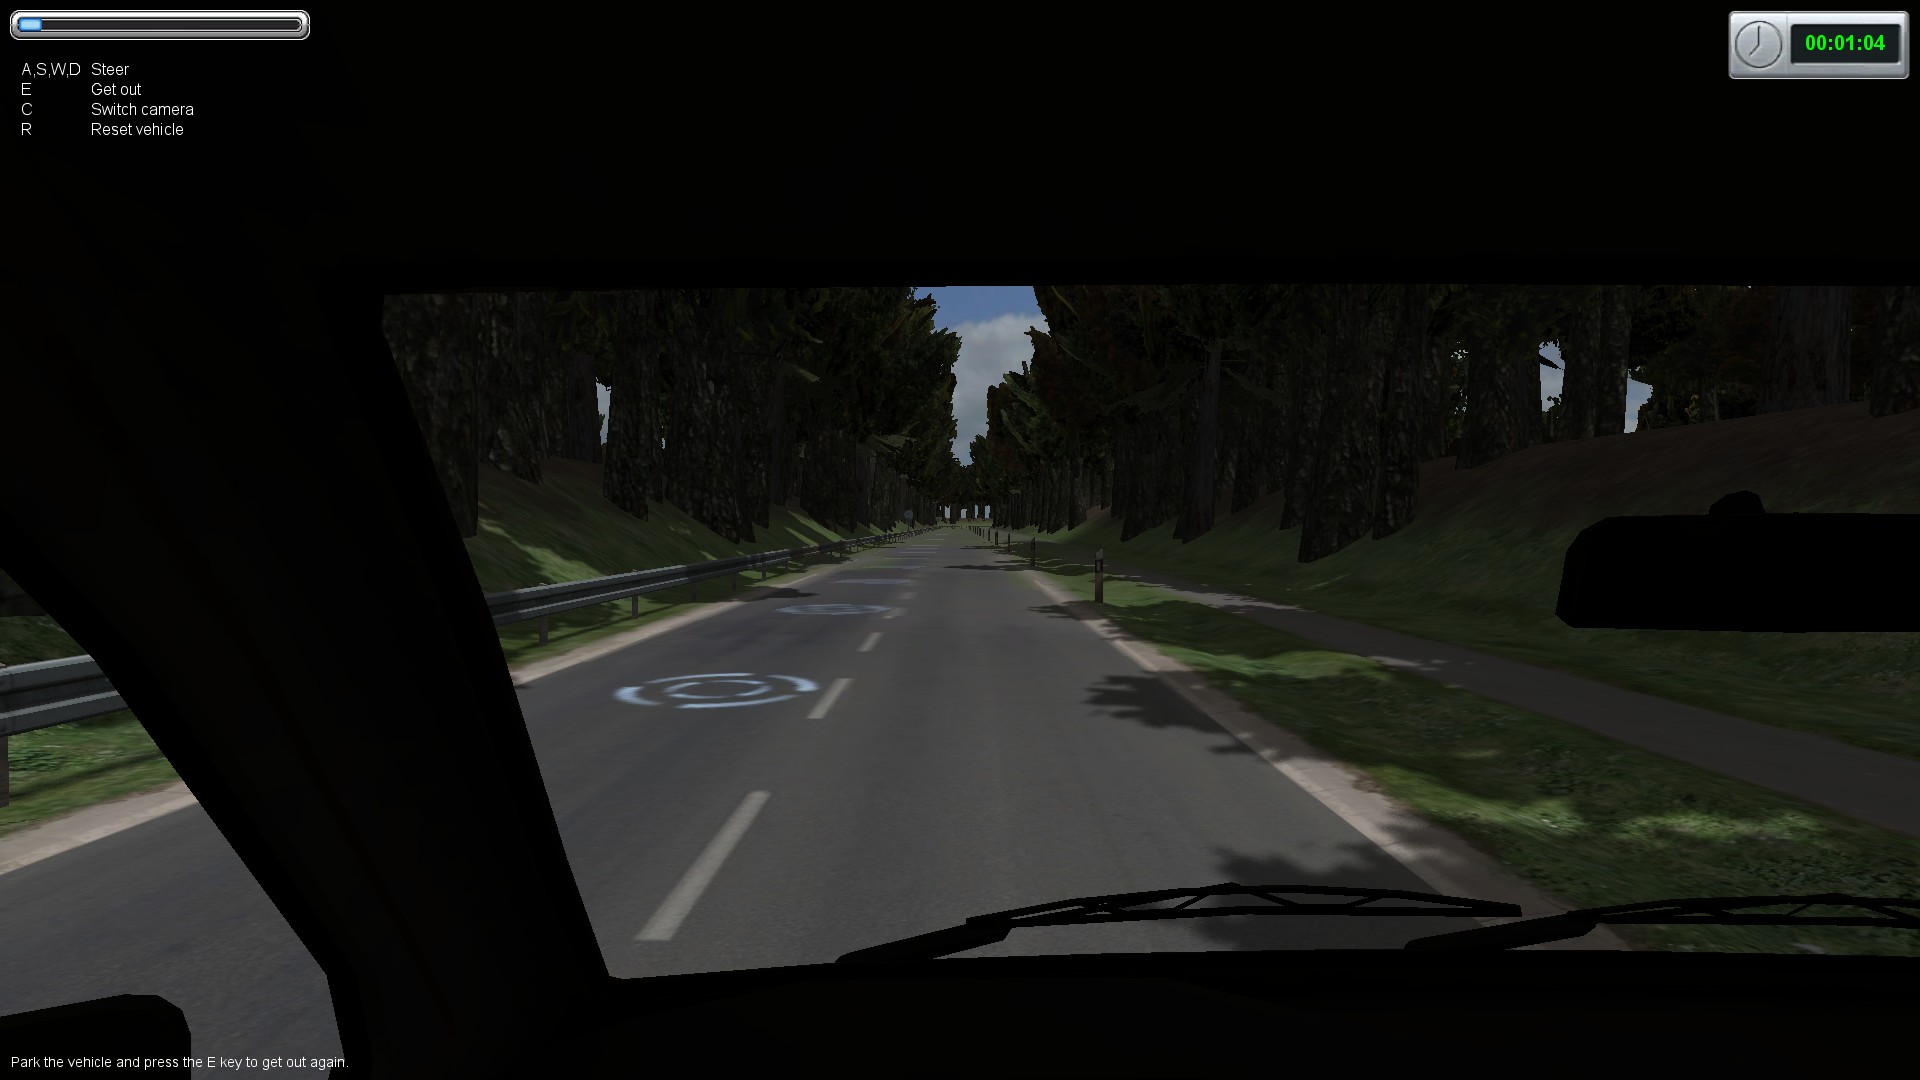 Roadworks - The Simulation screenshot